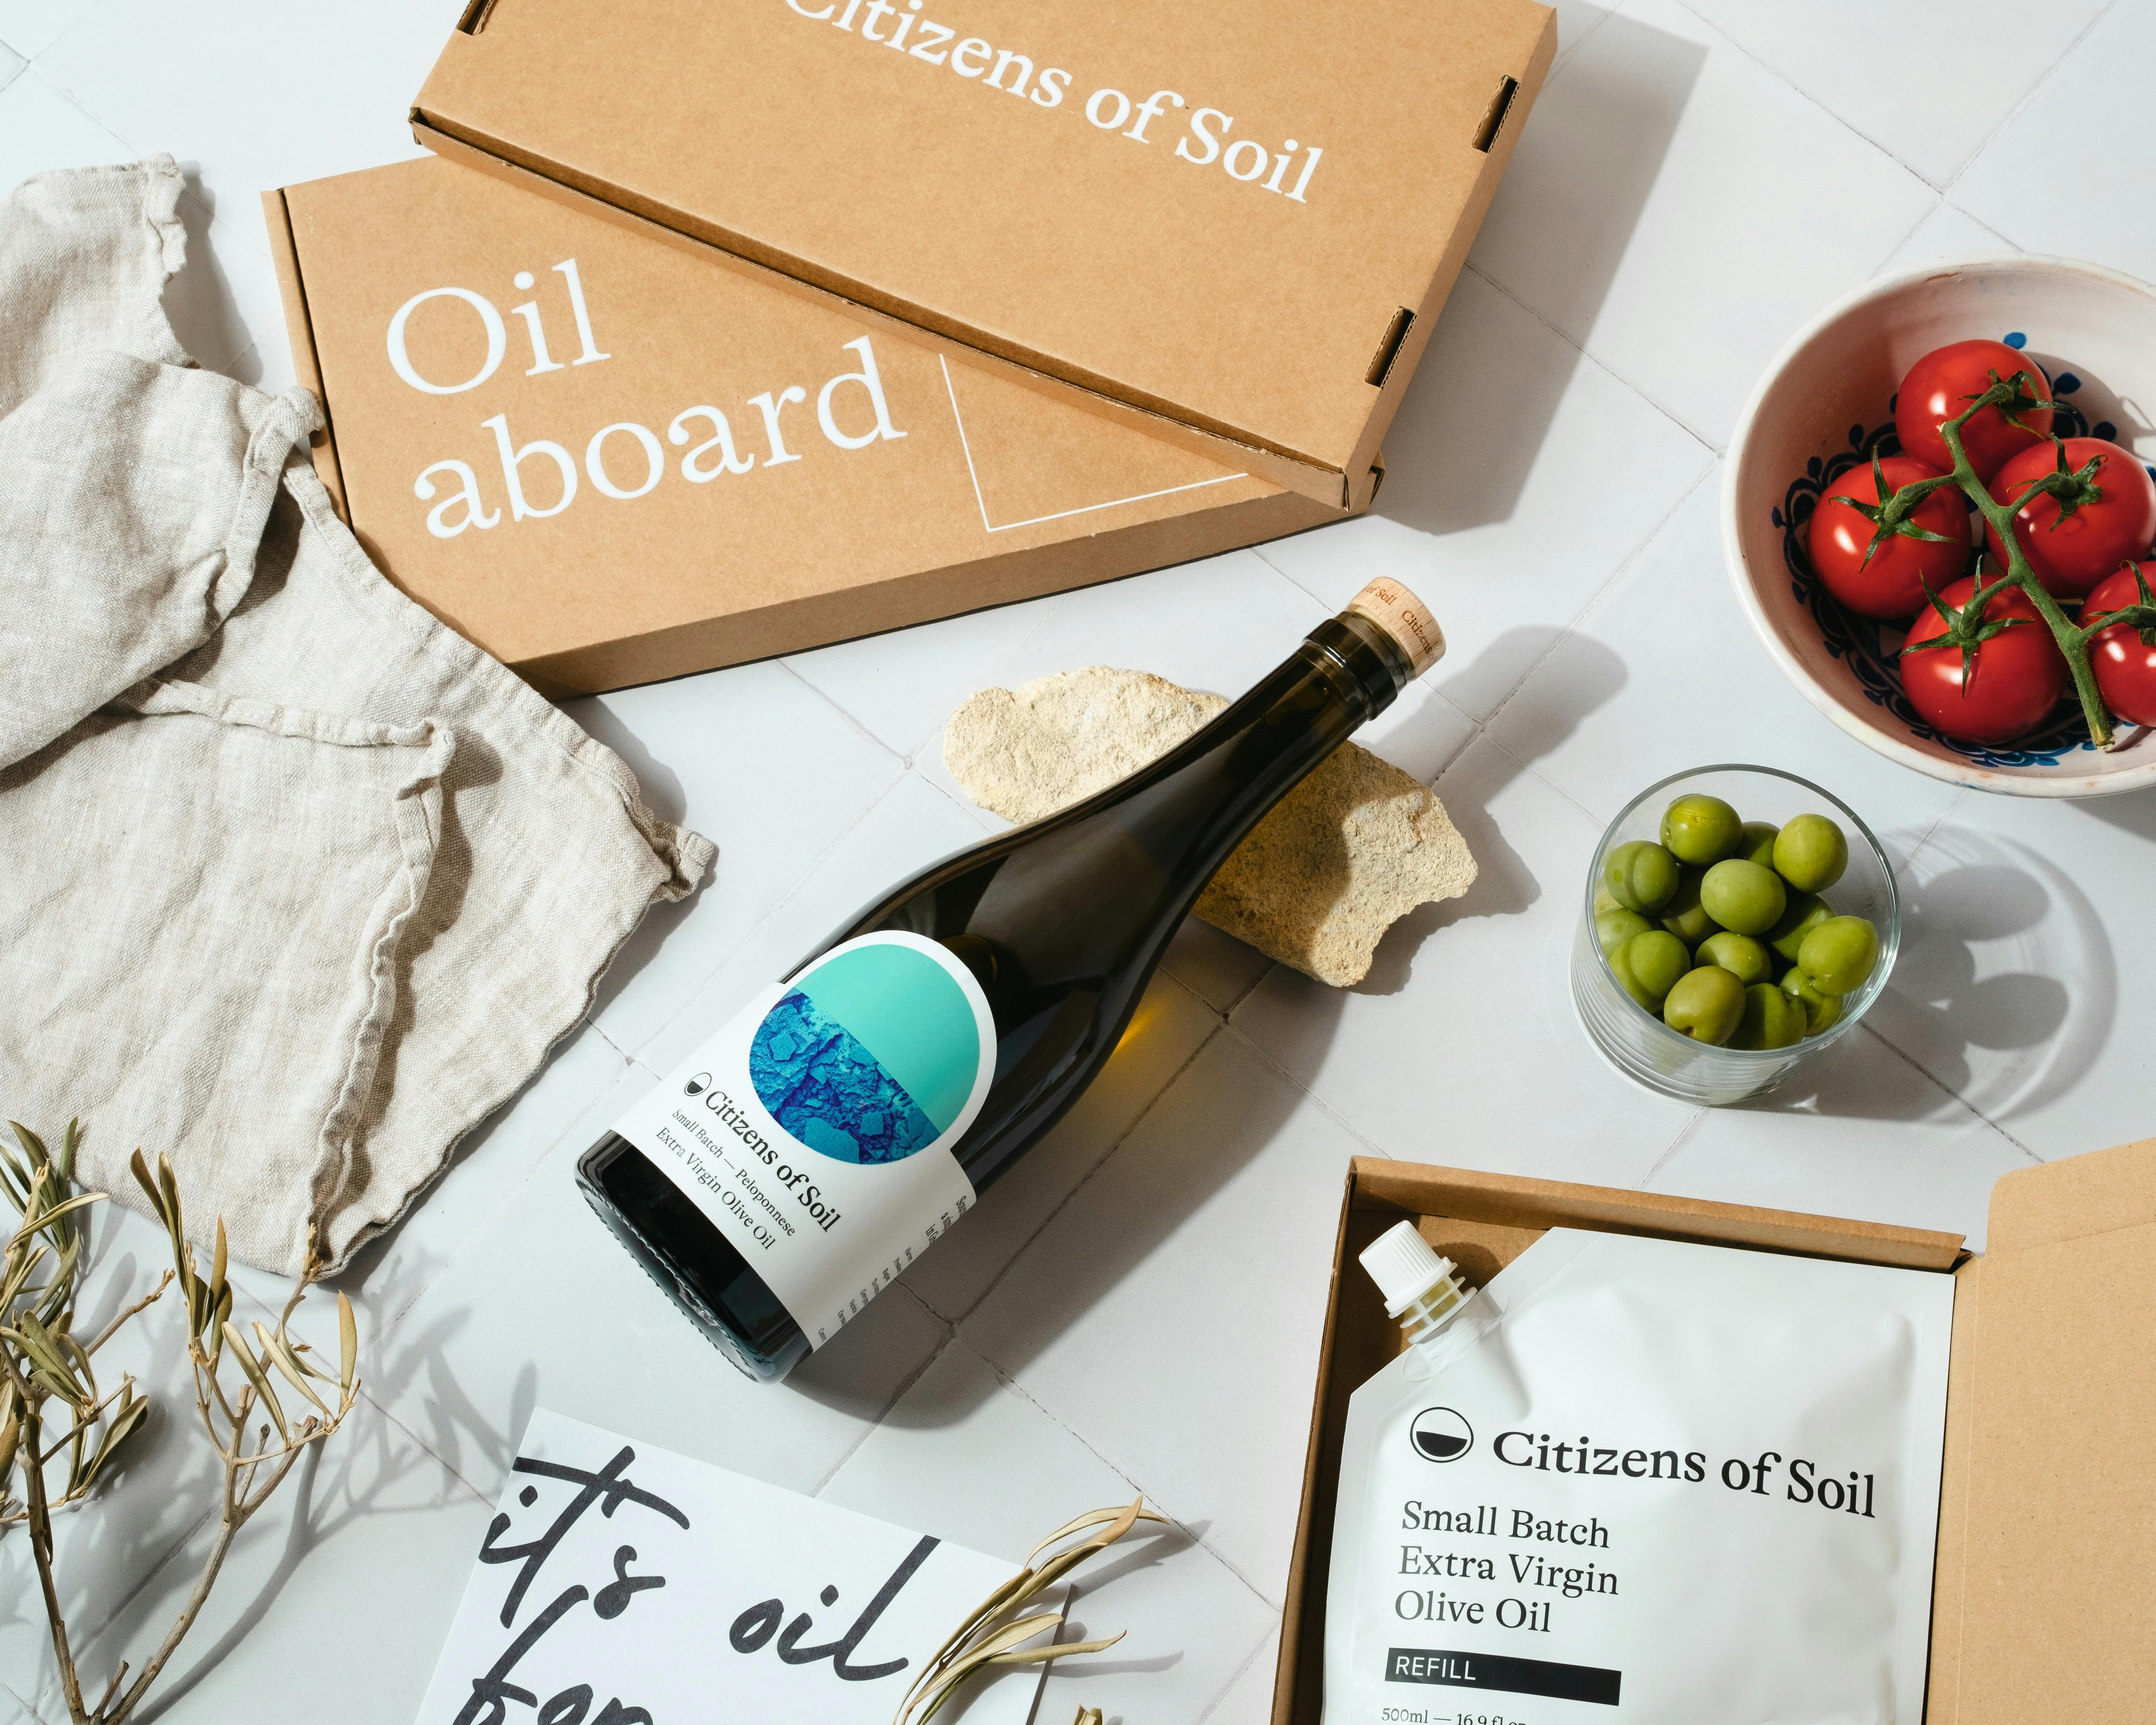 Citizens of Soil olive oil bottle on a white table